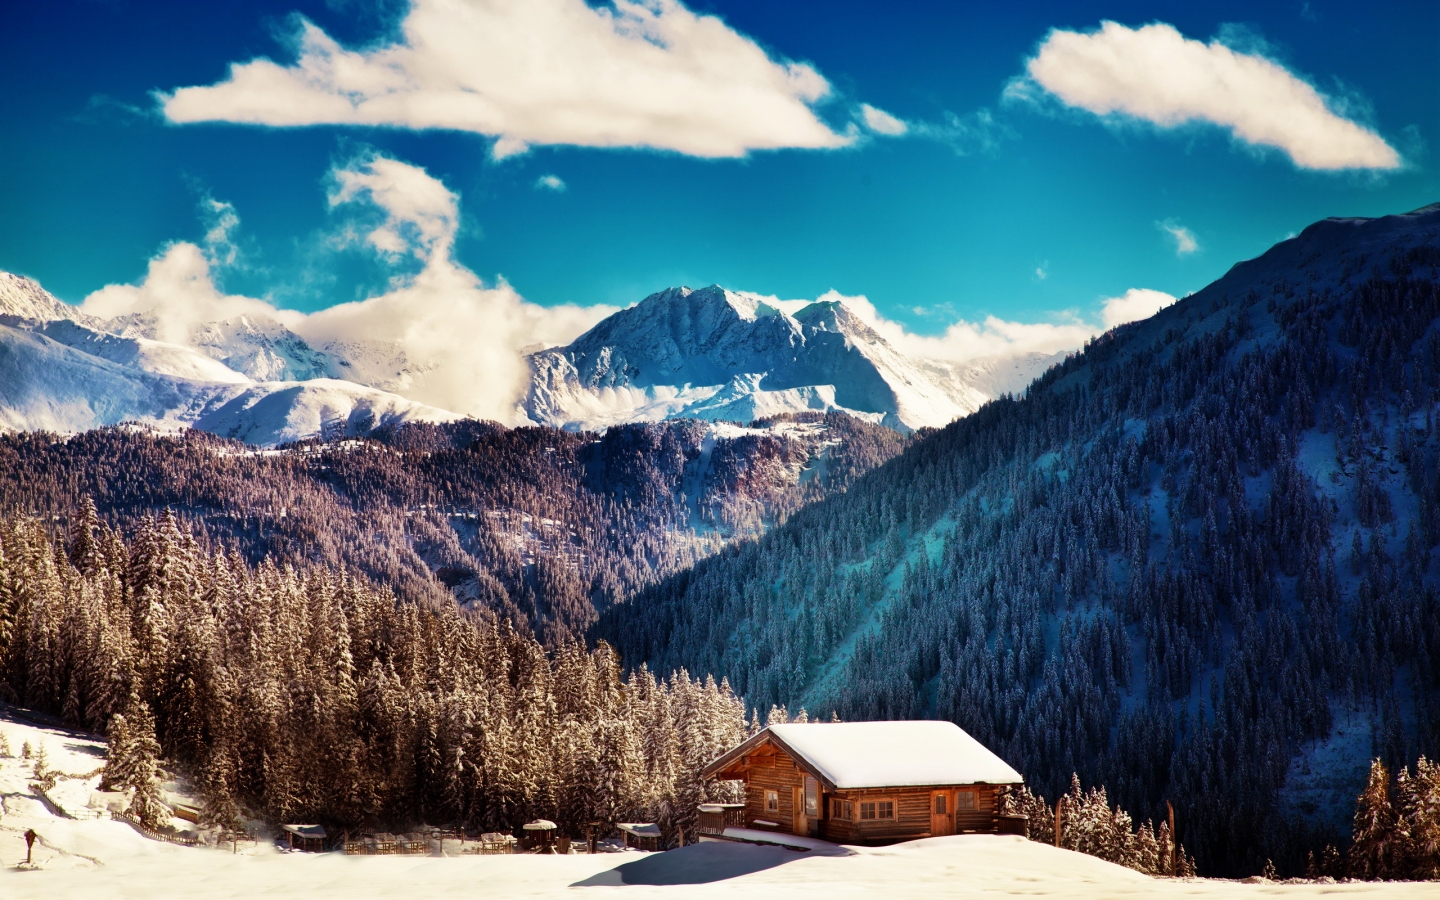 Smoky Mountains Cabin for 1440 x 900 widescreen resolution